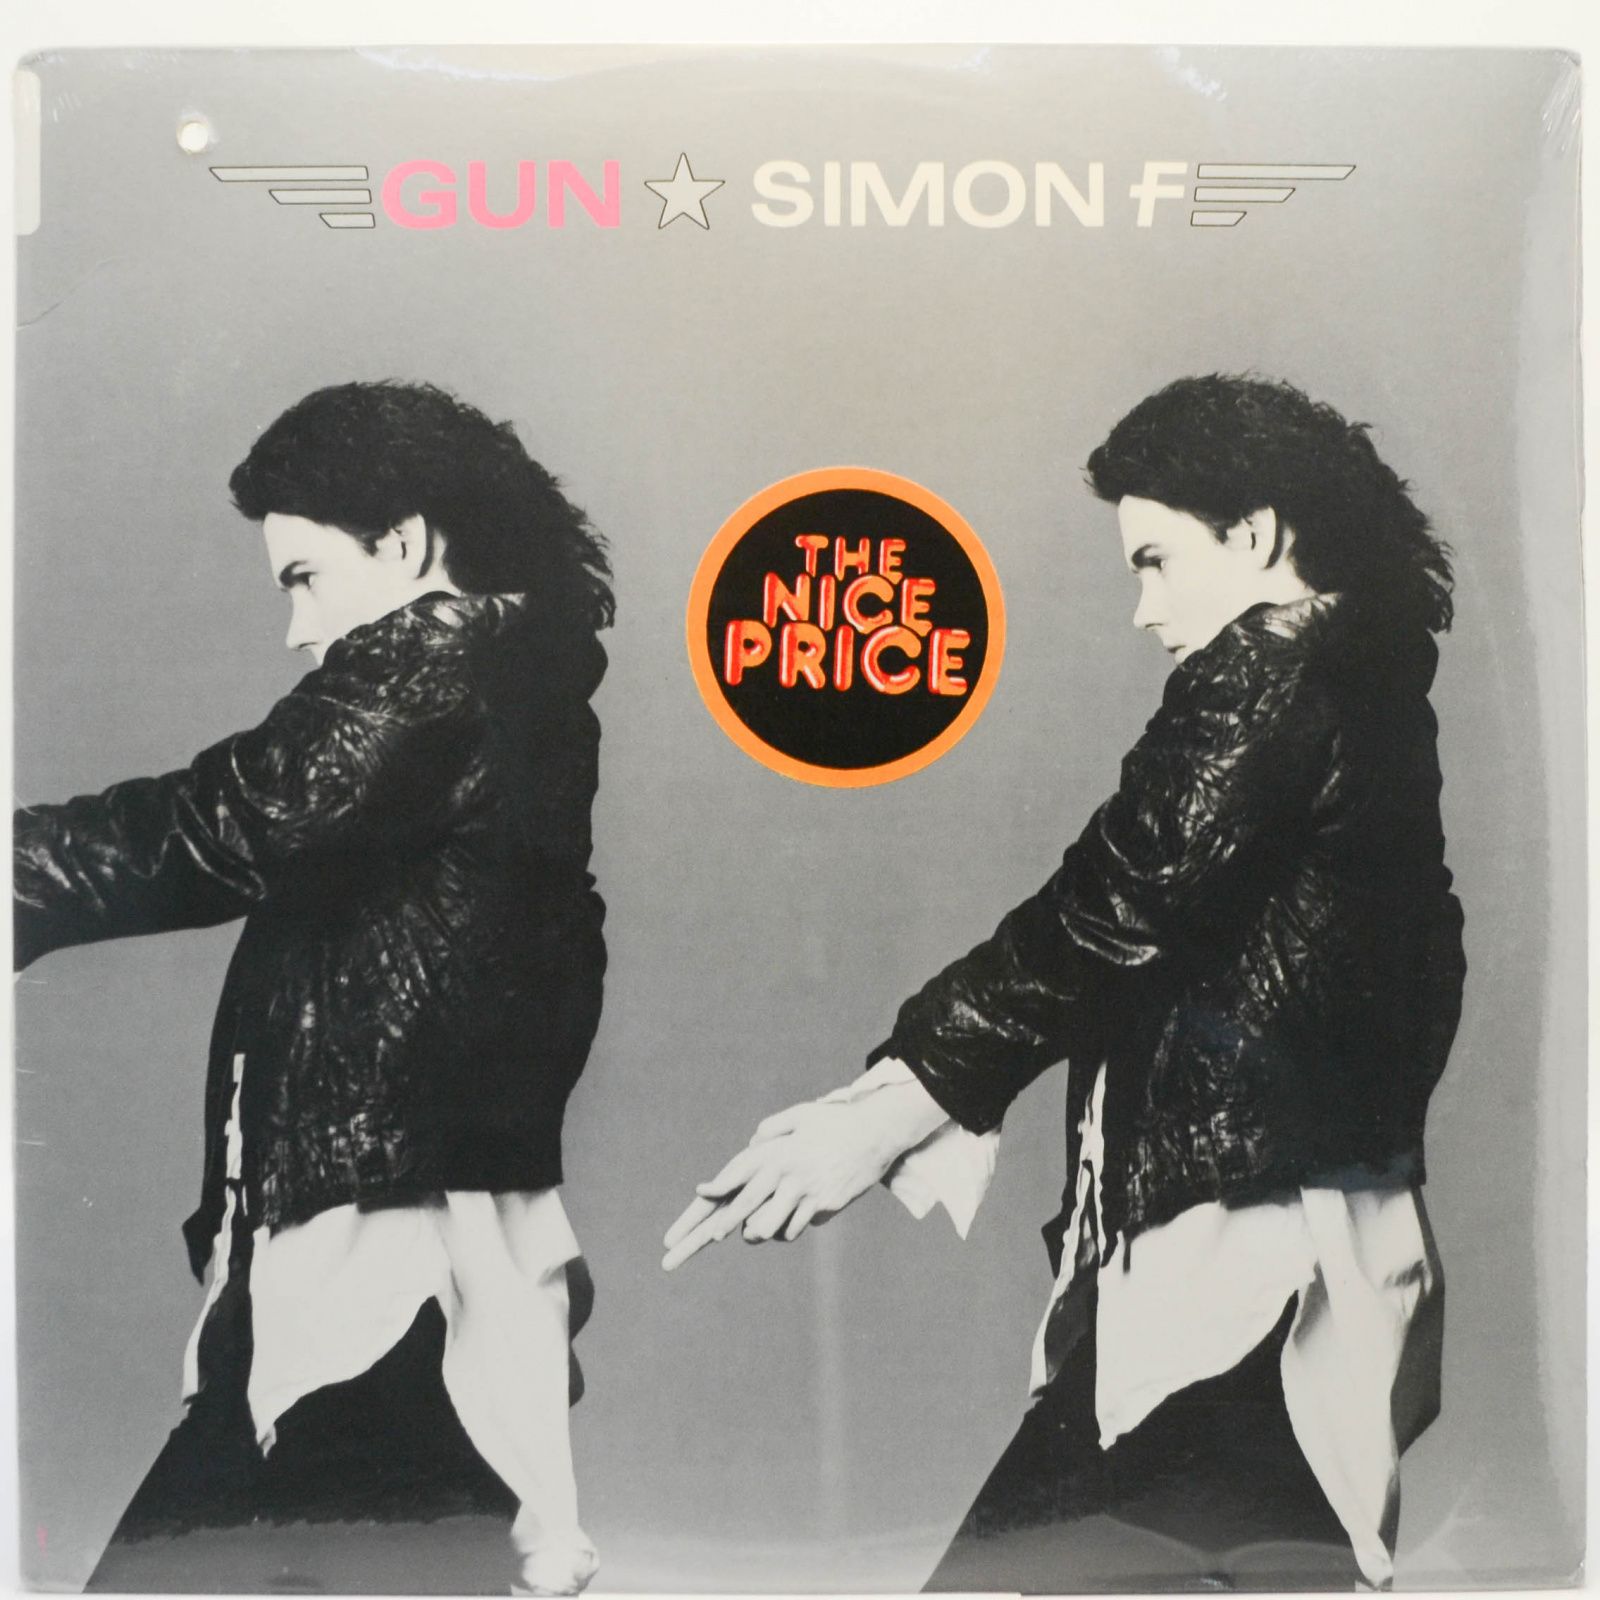 Simon F — Gun, 1985